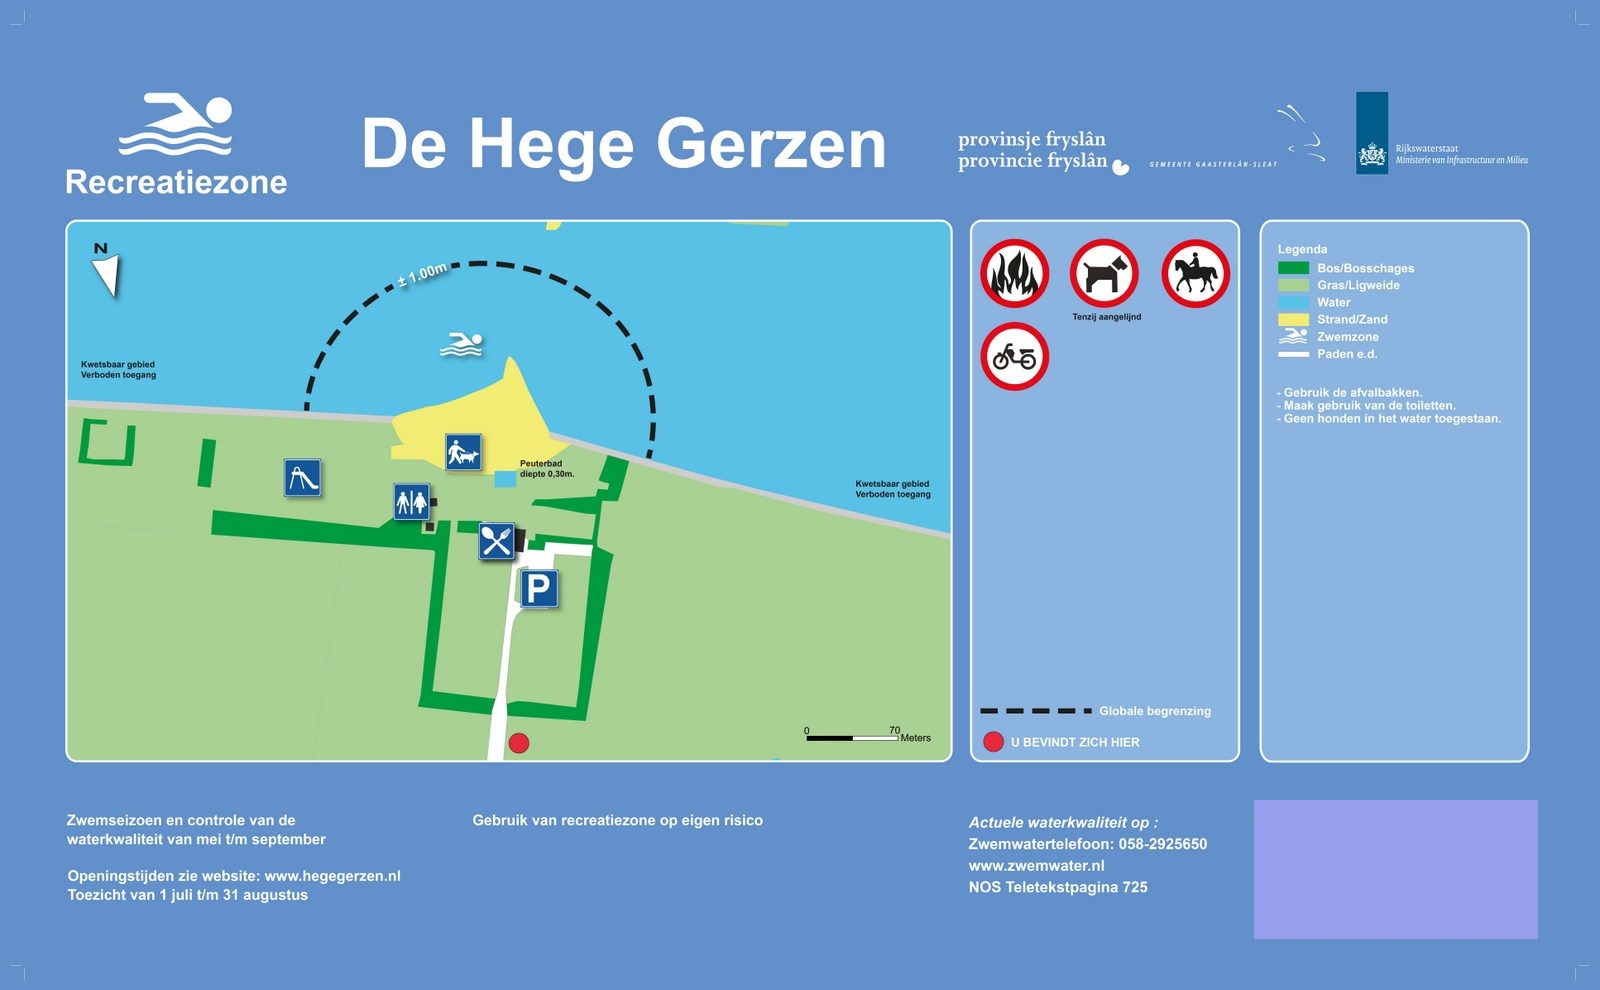 The information board at the swimming location De Hege Gerzen